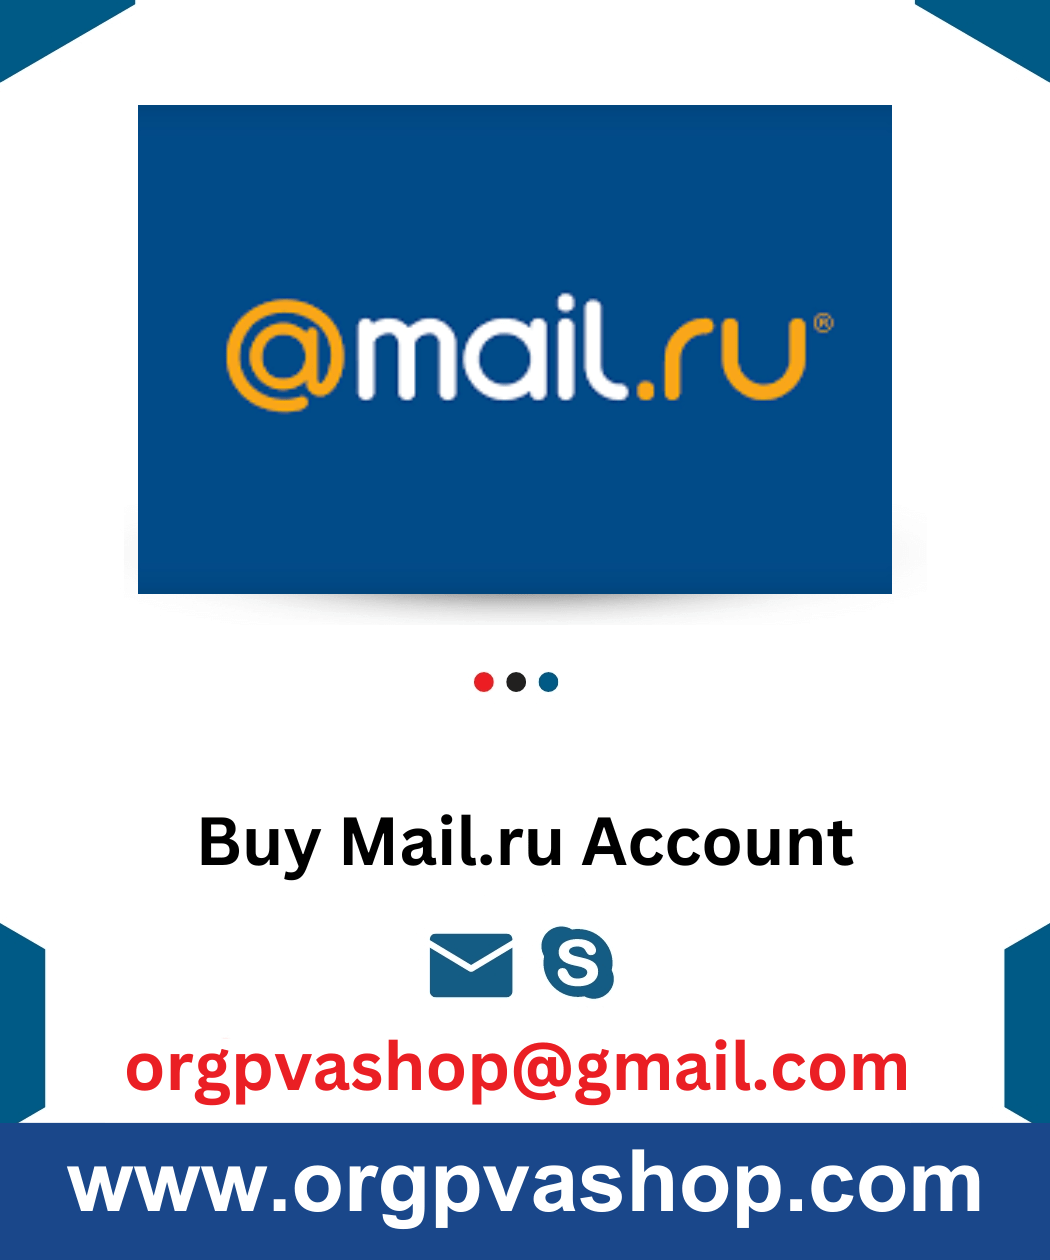 New Mail.ru accounts